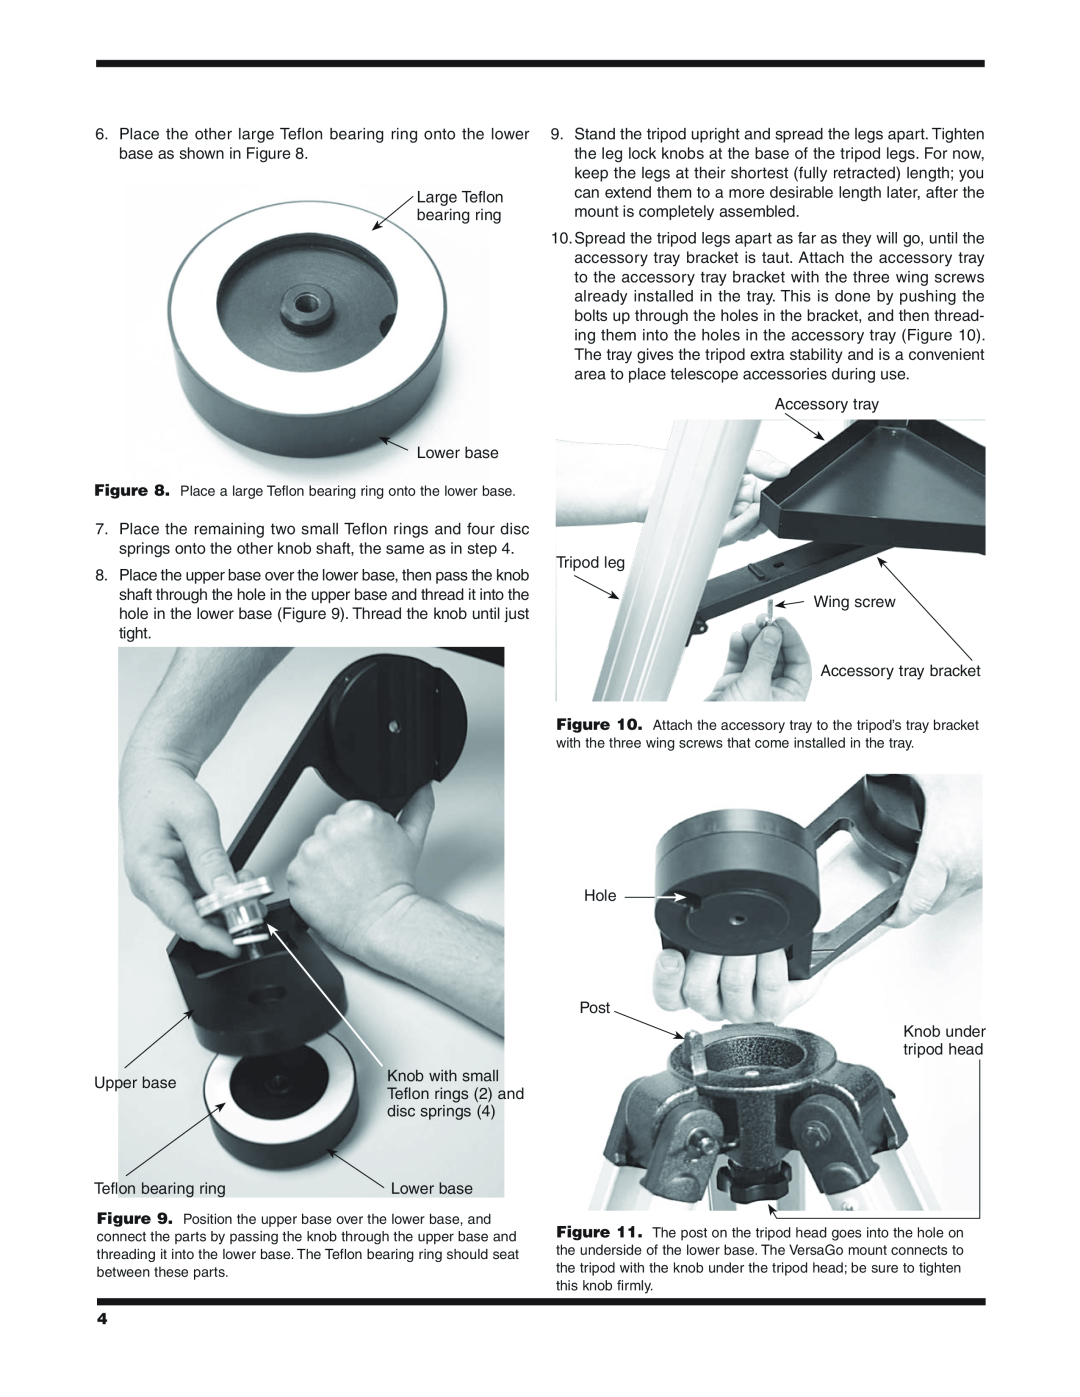 Orion #5682 instruction manual Large Teflon bearing ring Lower base 